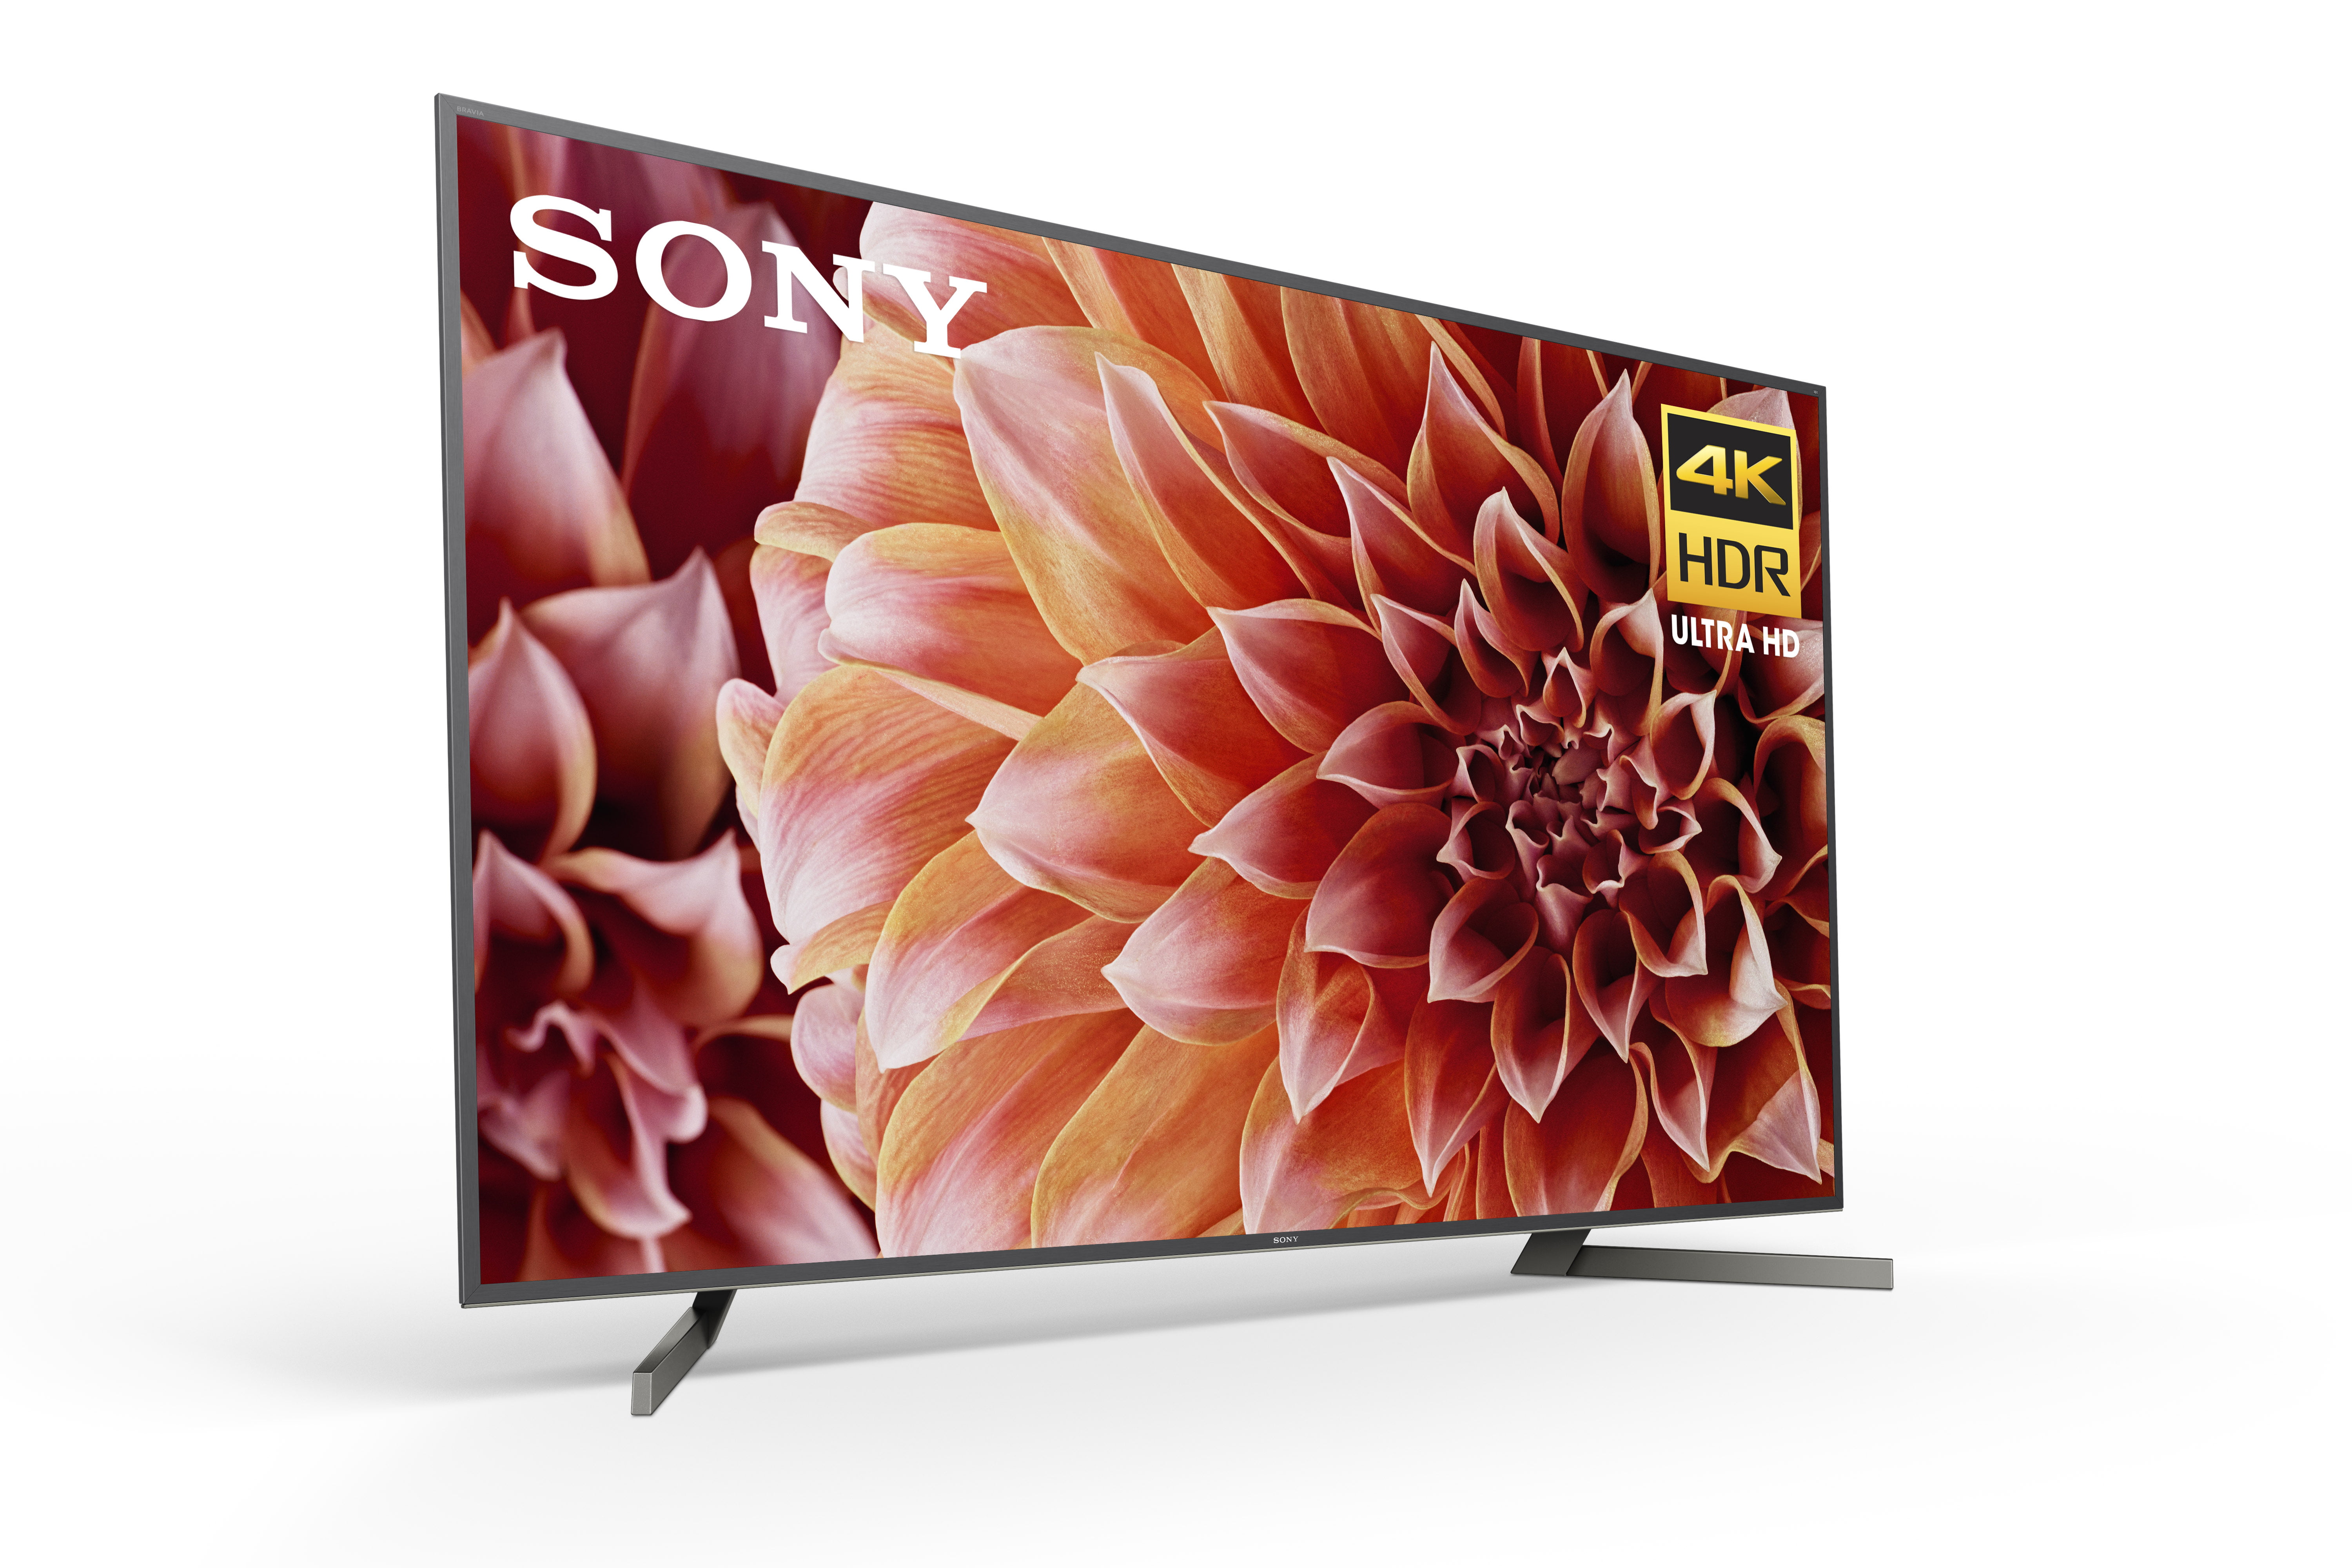 Sony TV 55″ 4K Ultra HD Smart TV Android XBR-55X855G - Inversiones Varemat